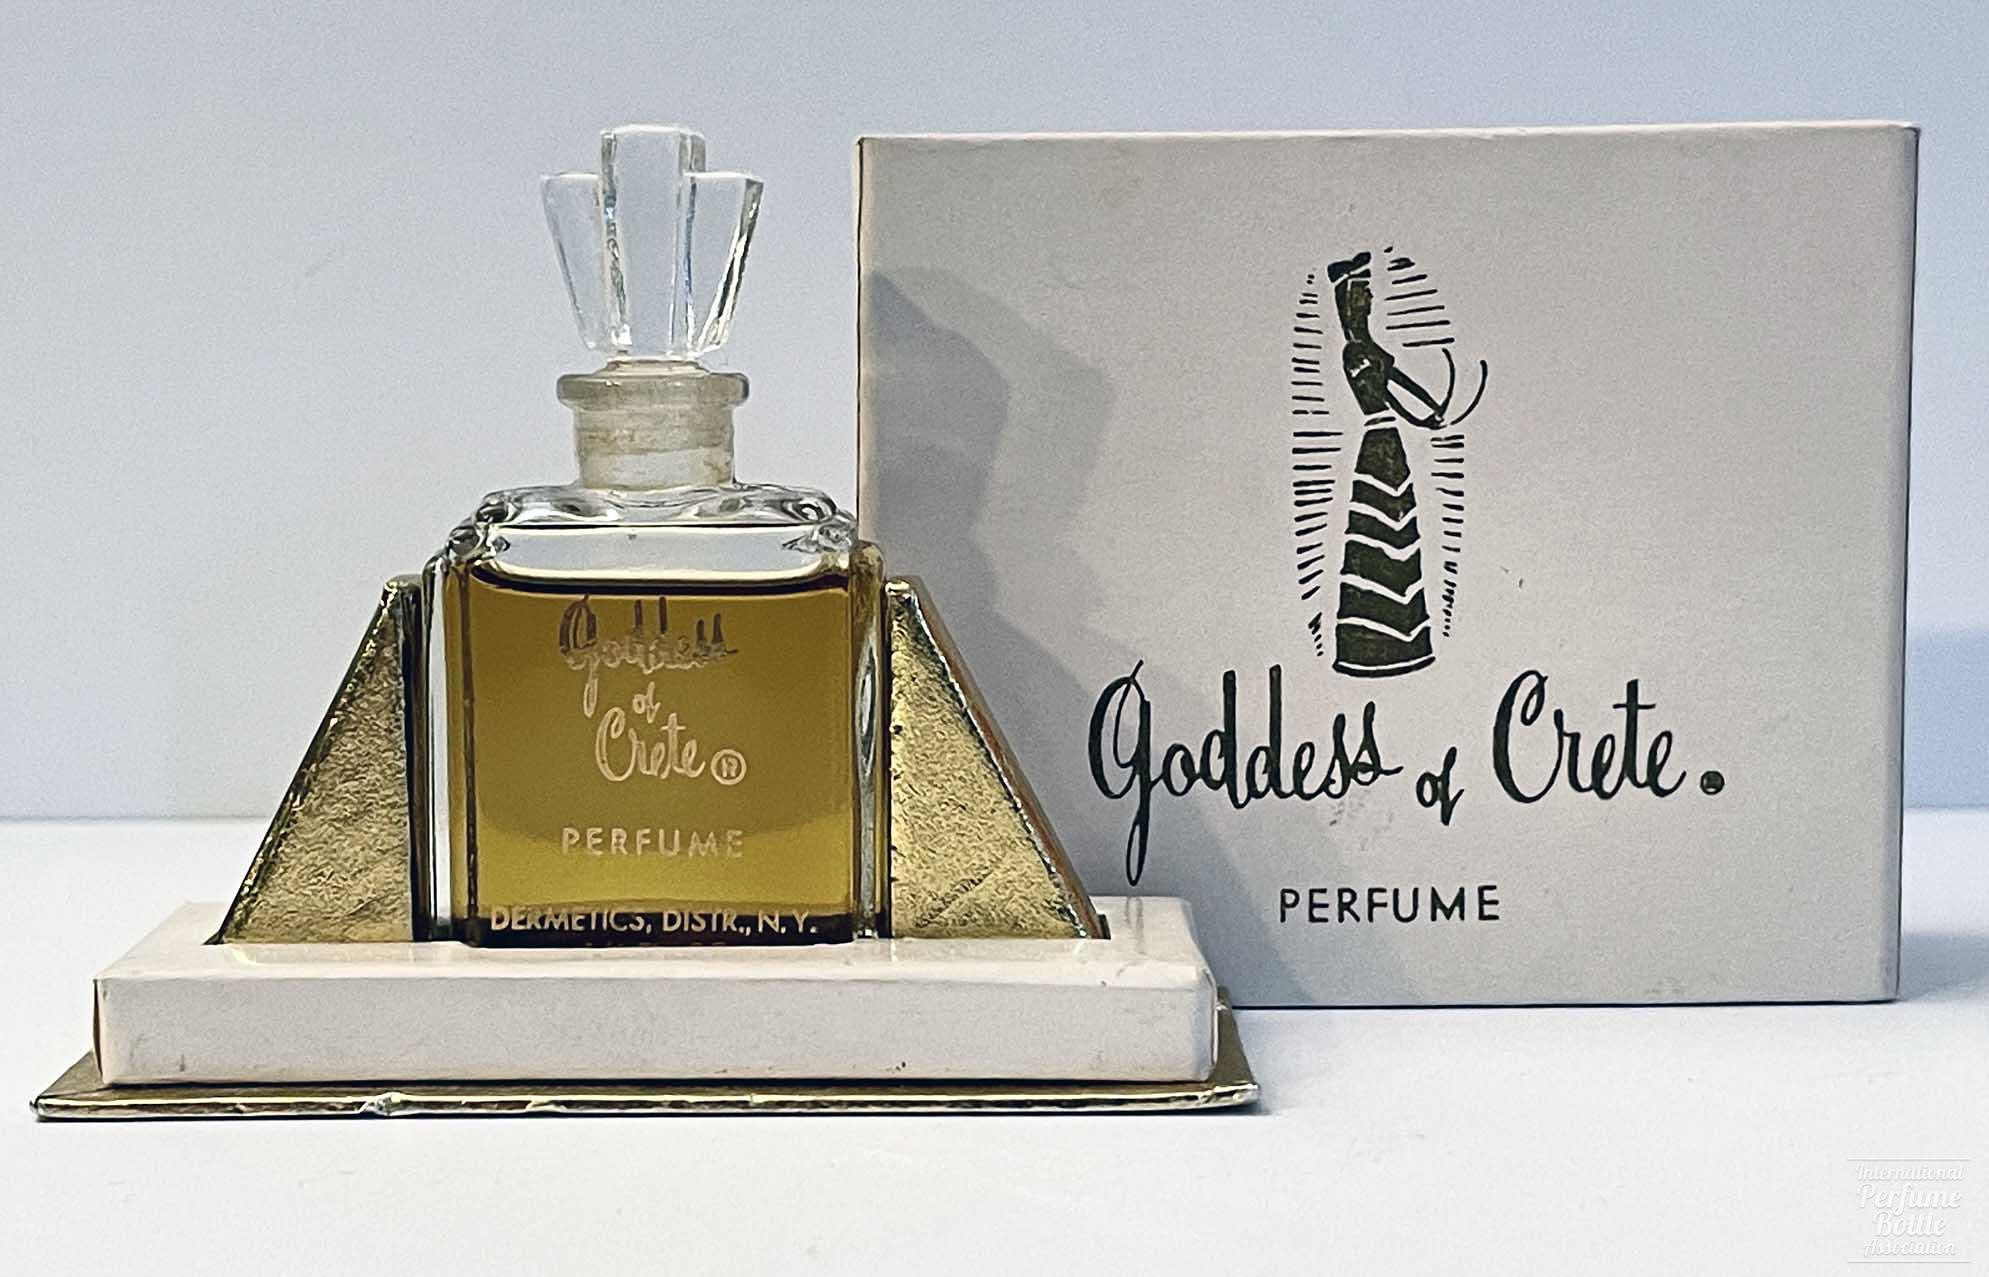 "Goddess of Crete" Perfume by Dermetics